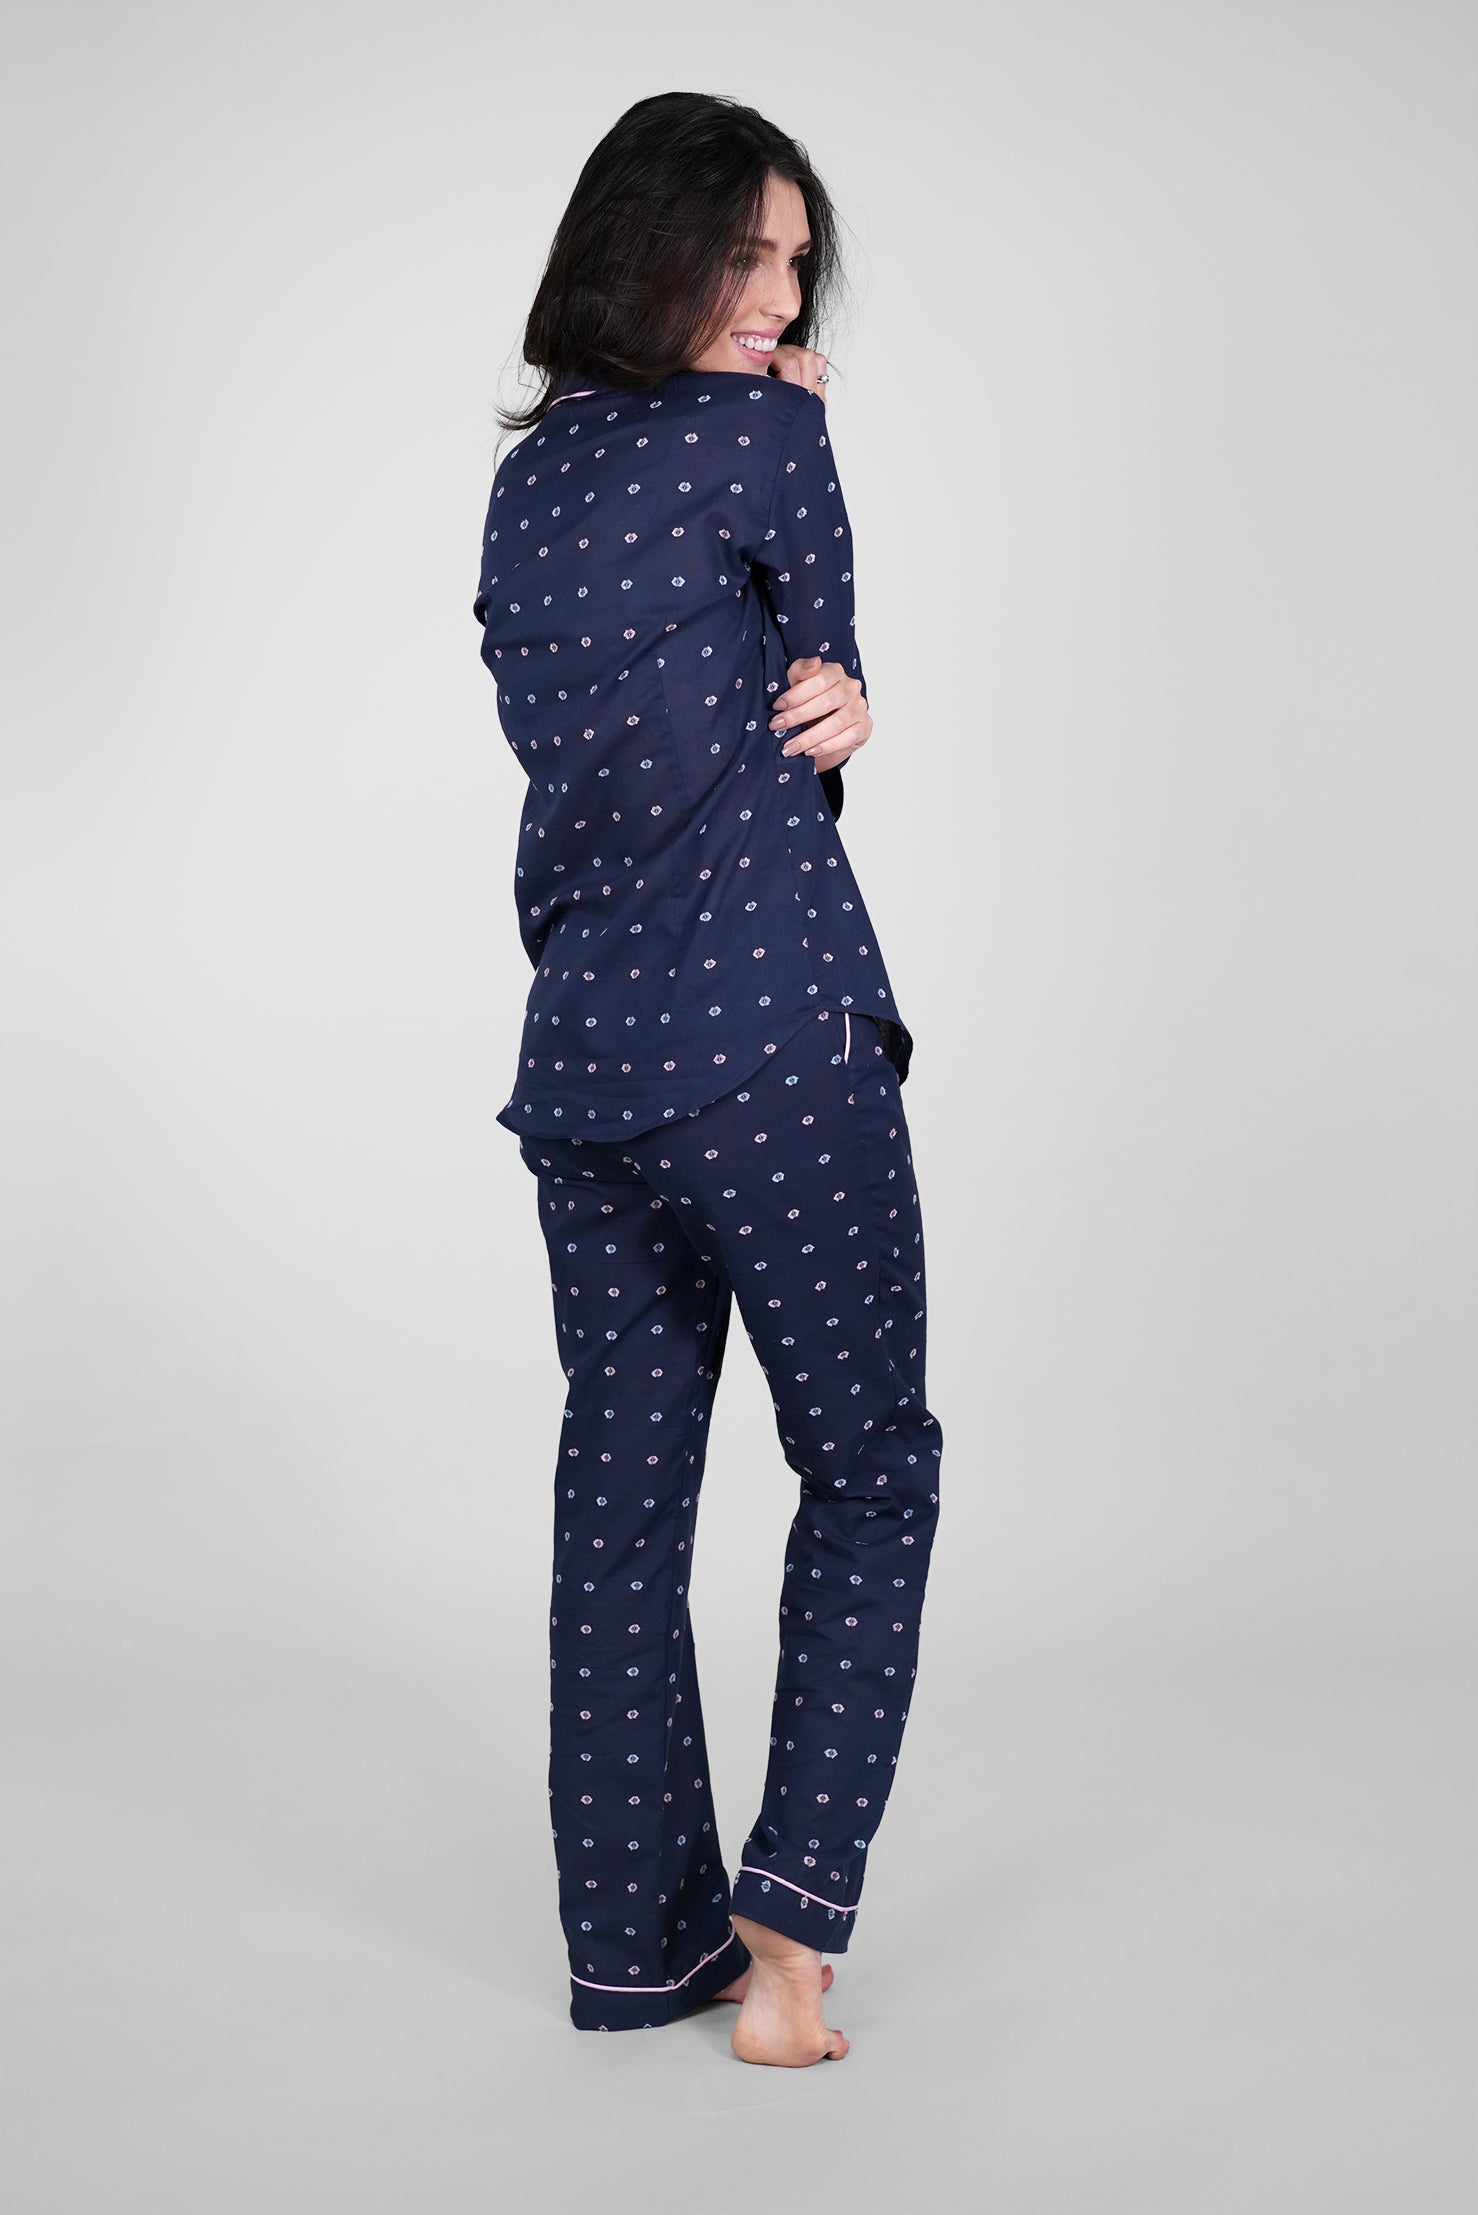 Pijama feminino Lachle Sleepwear Loungewear Frete grátis Feito a mão Moda Sustentável Confortável